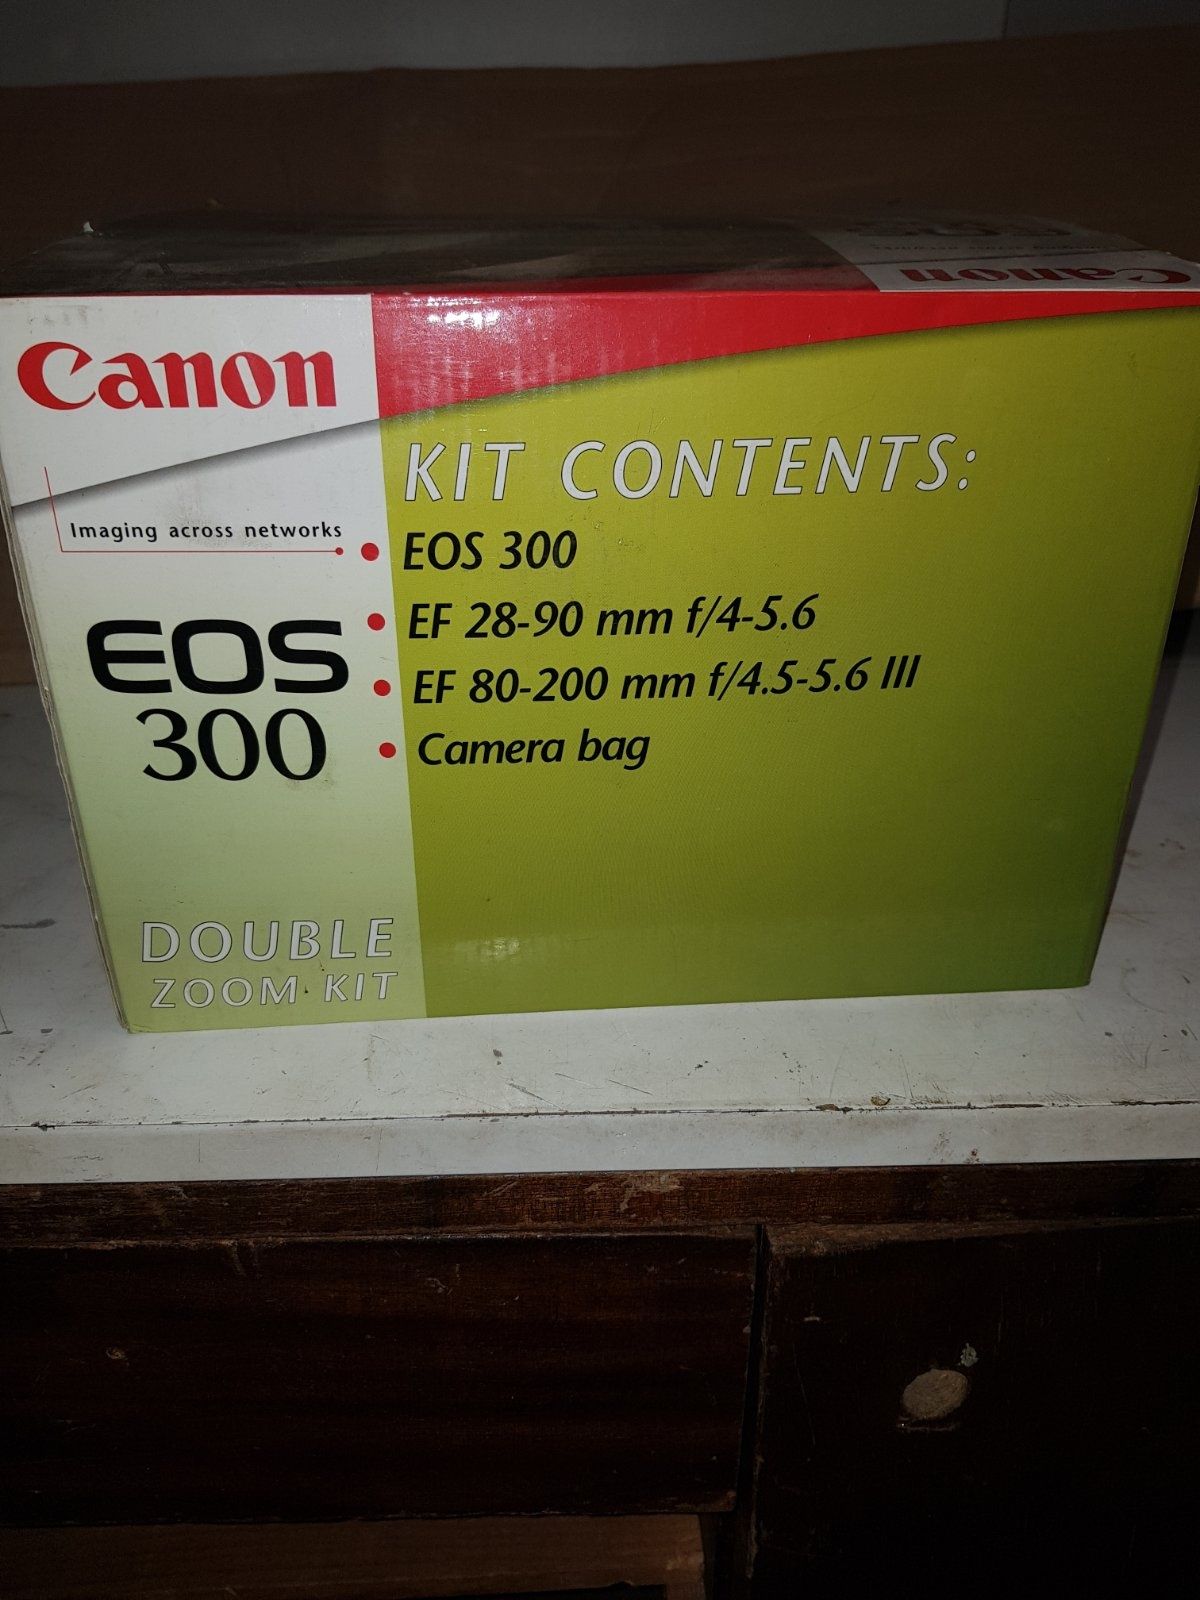 Фотоапарат Canon EOS 300